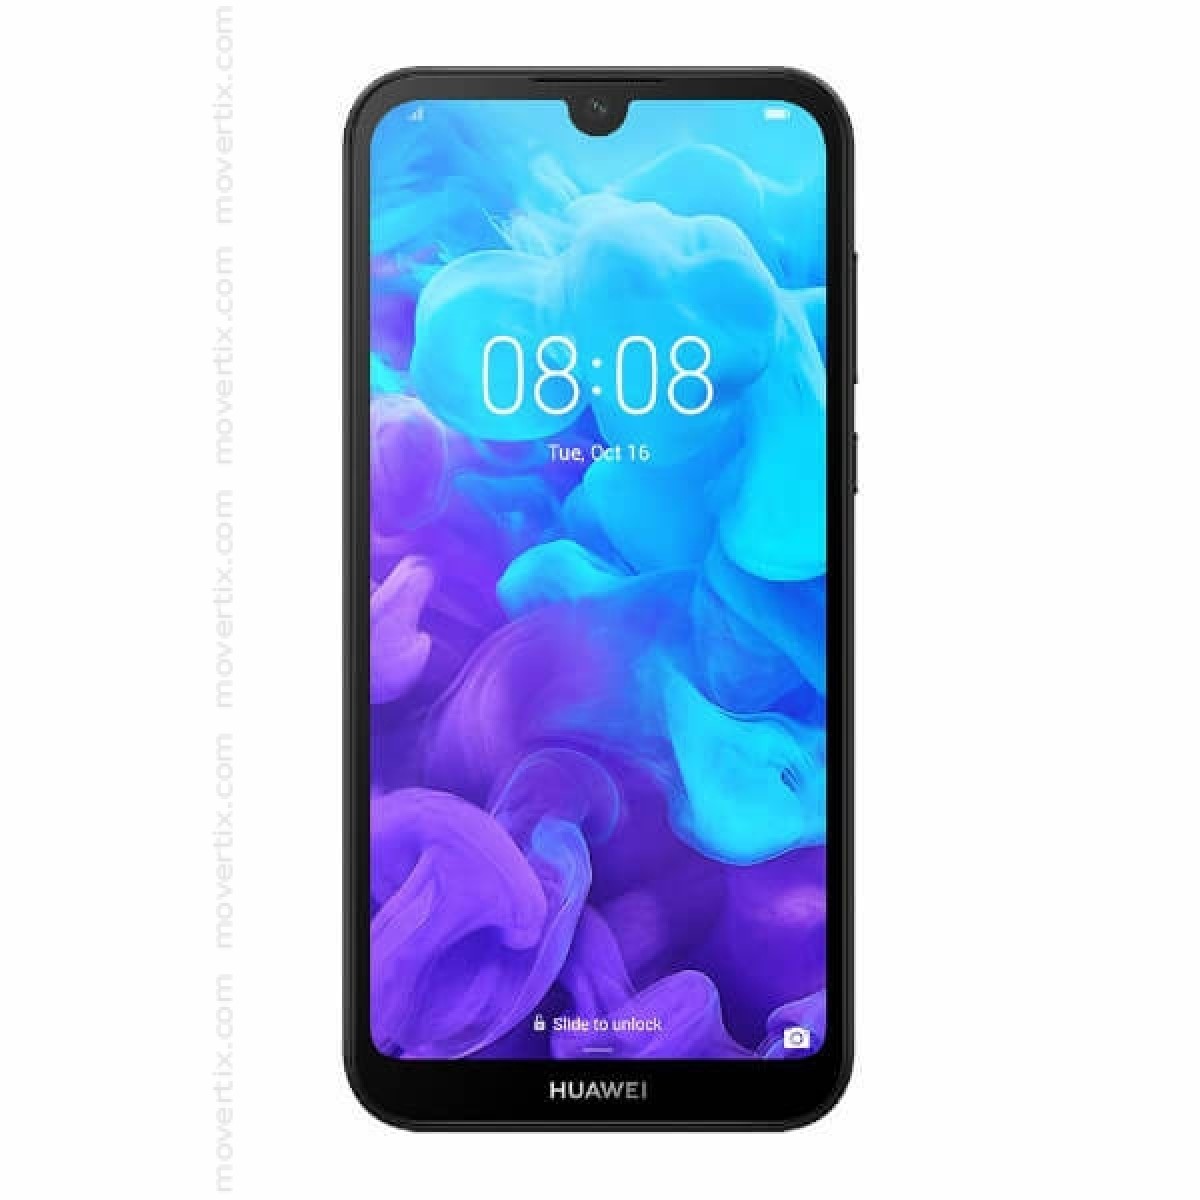 Huawei Y5 19 Dual Sim Midnight Black 16gb And 2gb Ram Amn Lx9 Movertix Mobile Phones Shop